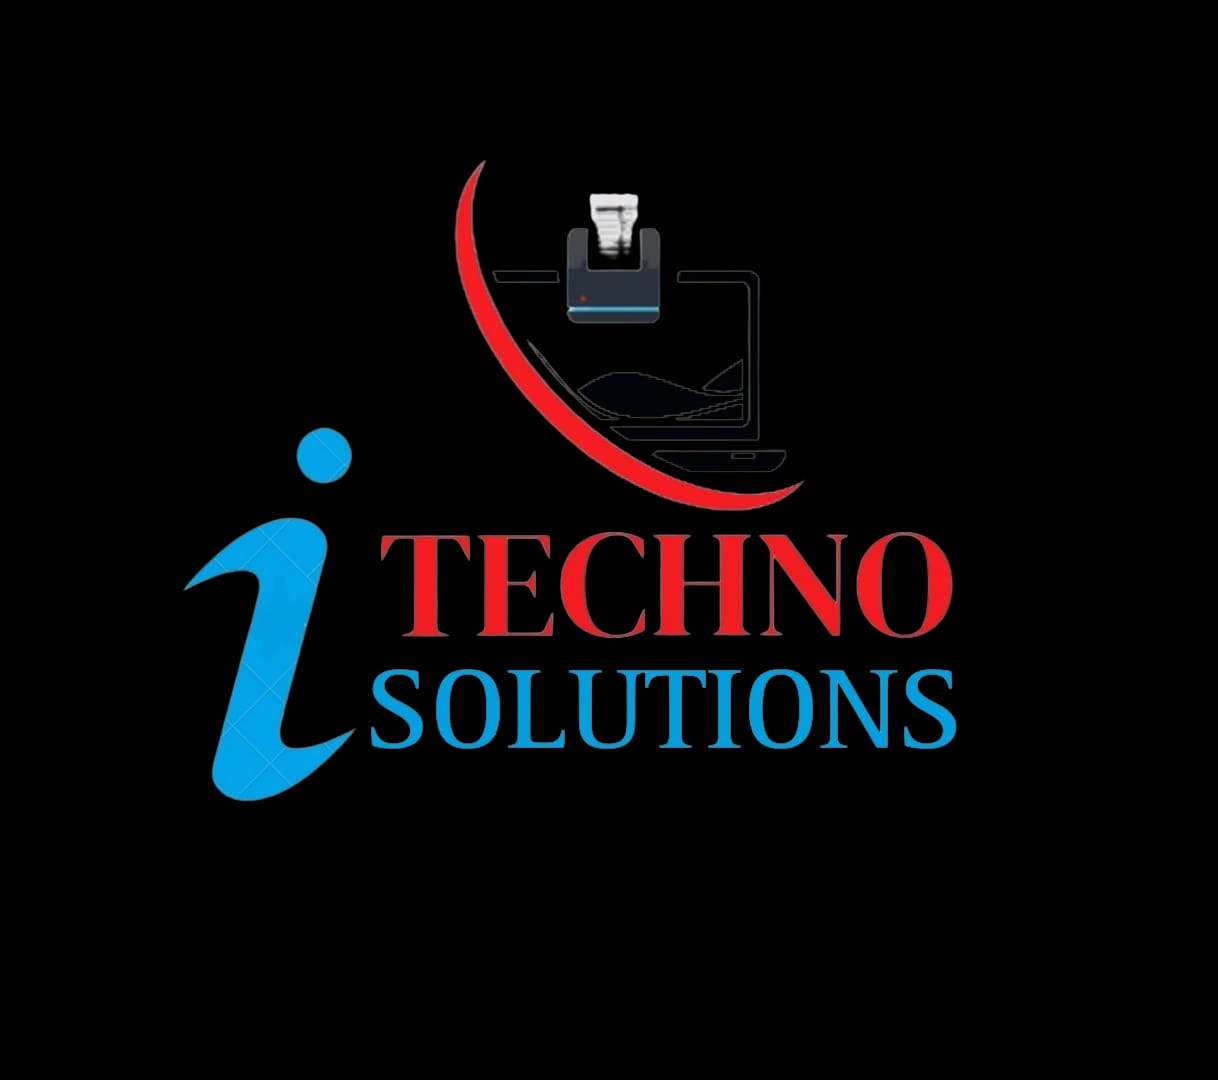 iTechno Solutions